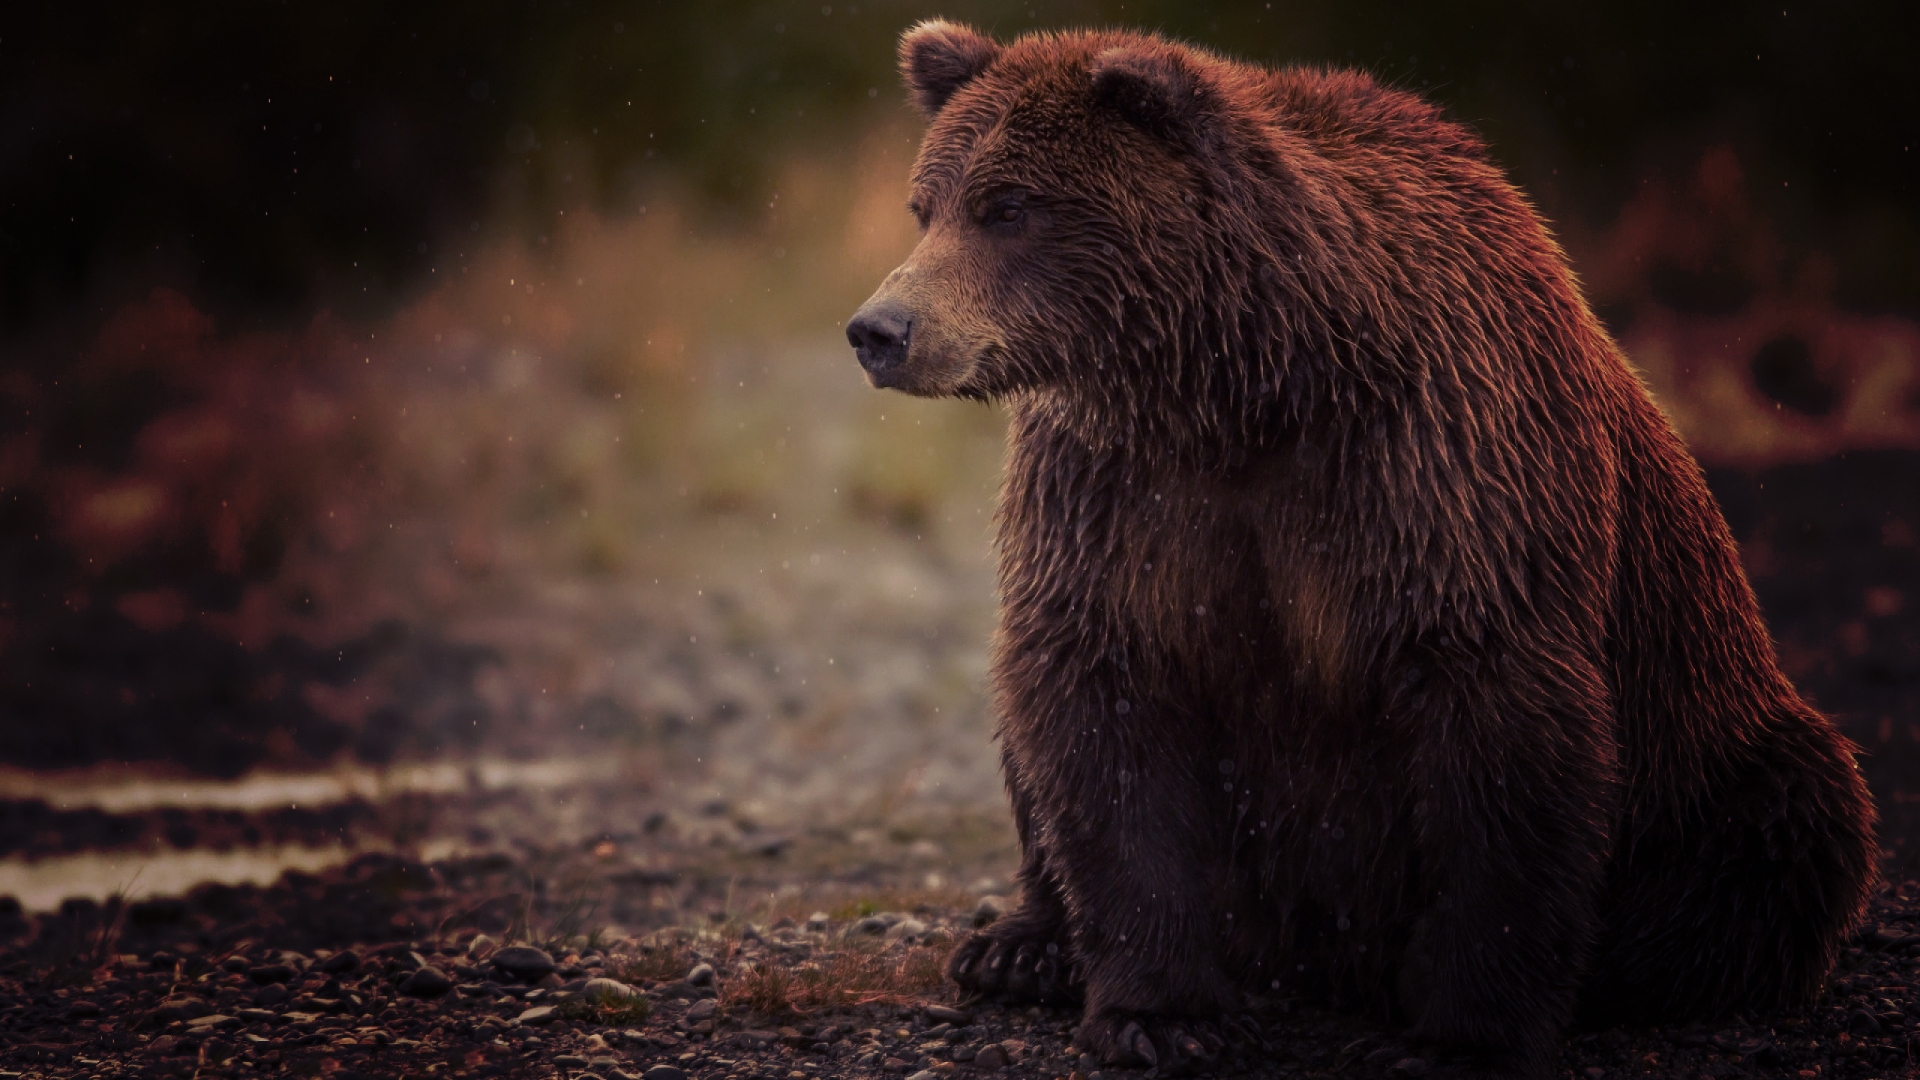 Sad Bear for 1920 x 1080 HDTV 1080p resolution